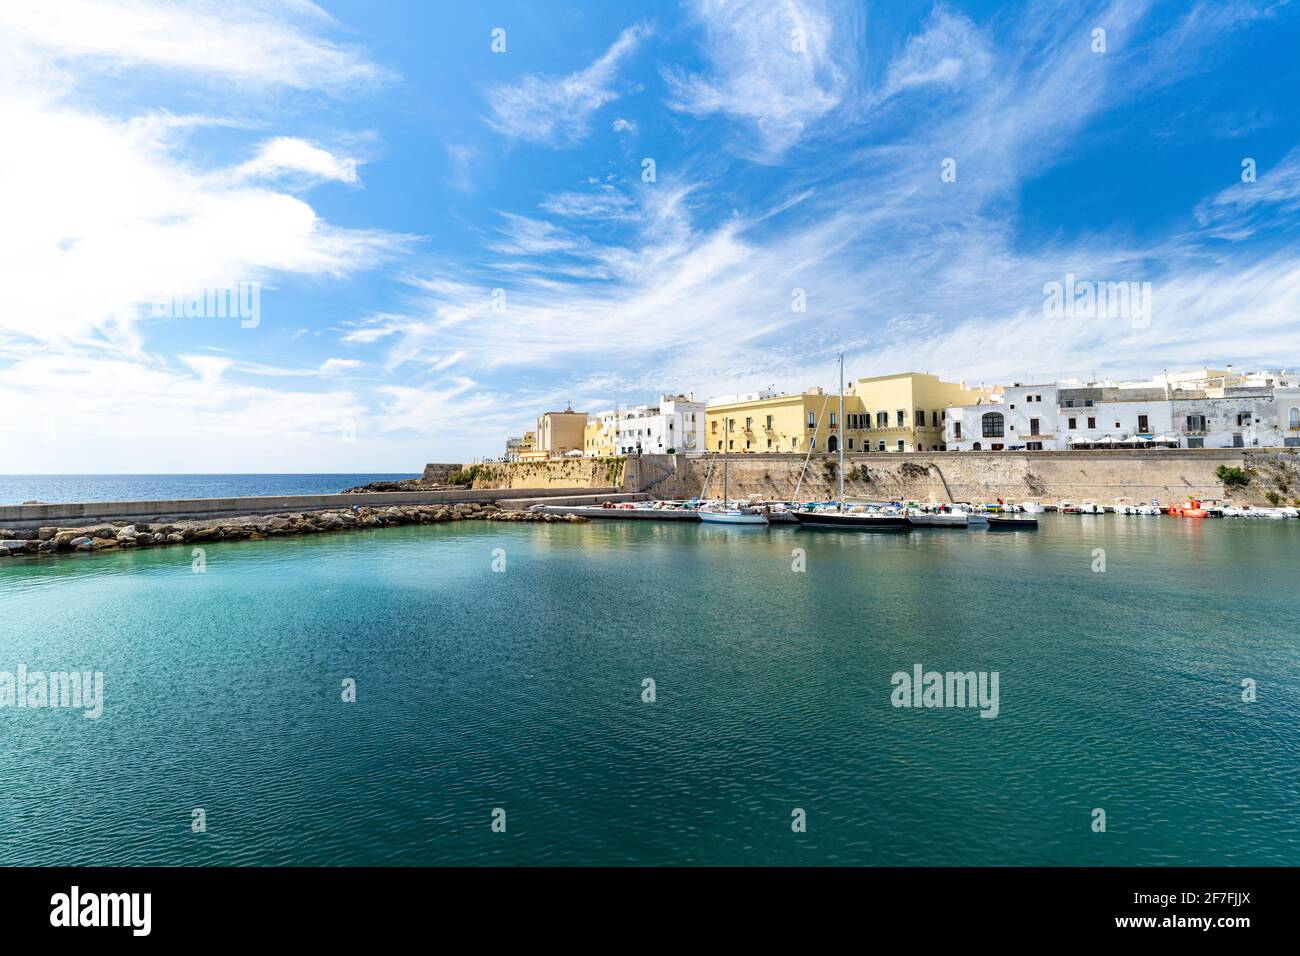 Casco antiguo y puerto de Gallipoli, provincia de Lecce, Salento, Apulia, Italia, Europa Foto de stock